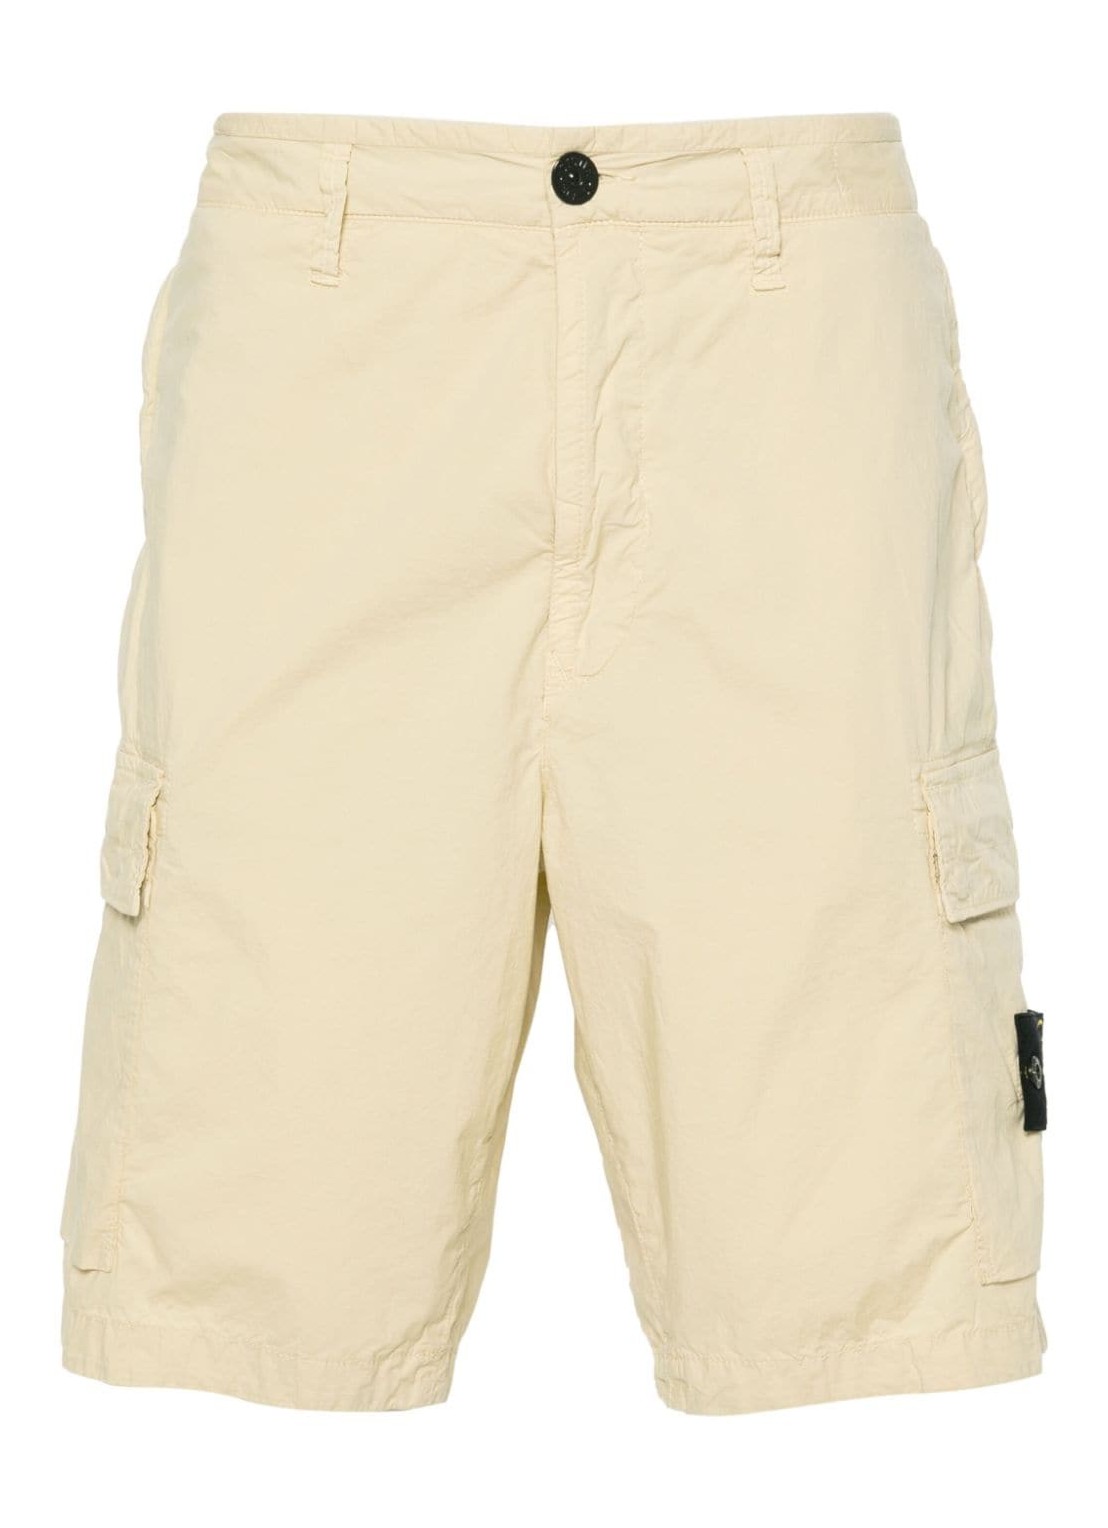 Pantalon corto stone island short pant man bermuda shorts 8015l0803 v0091 talla 30
 